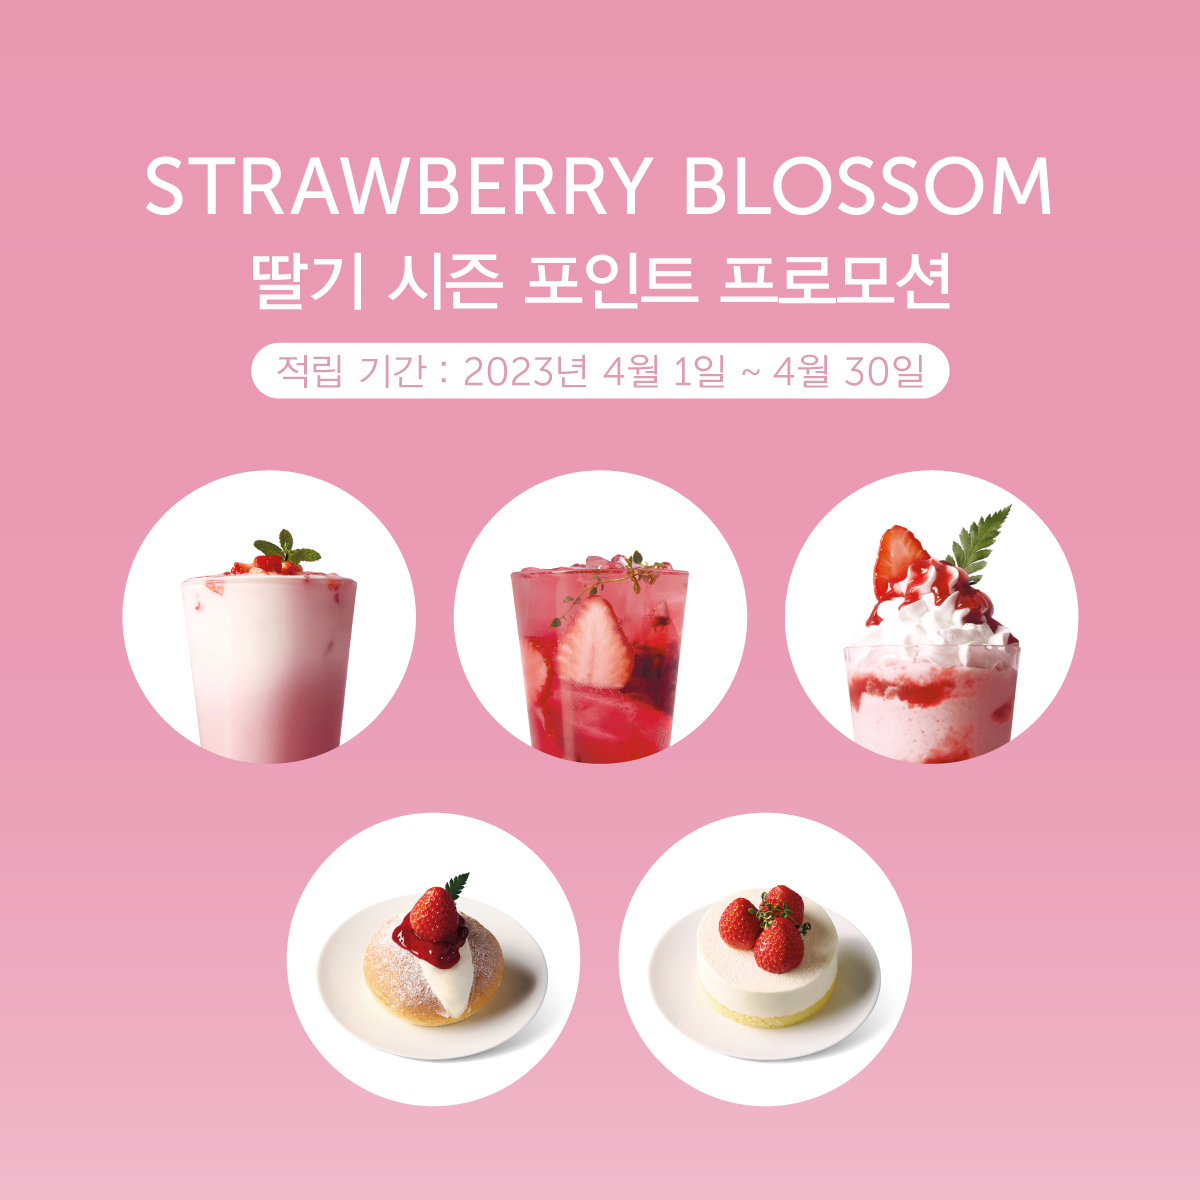 STRAWBERRY BLOSSOM 딸기 시즌 포인트 프로모션